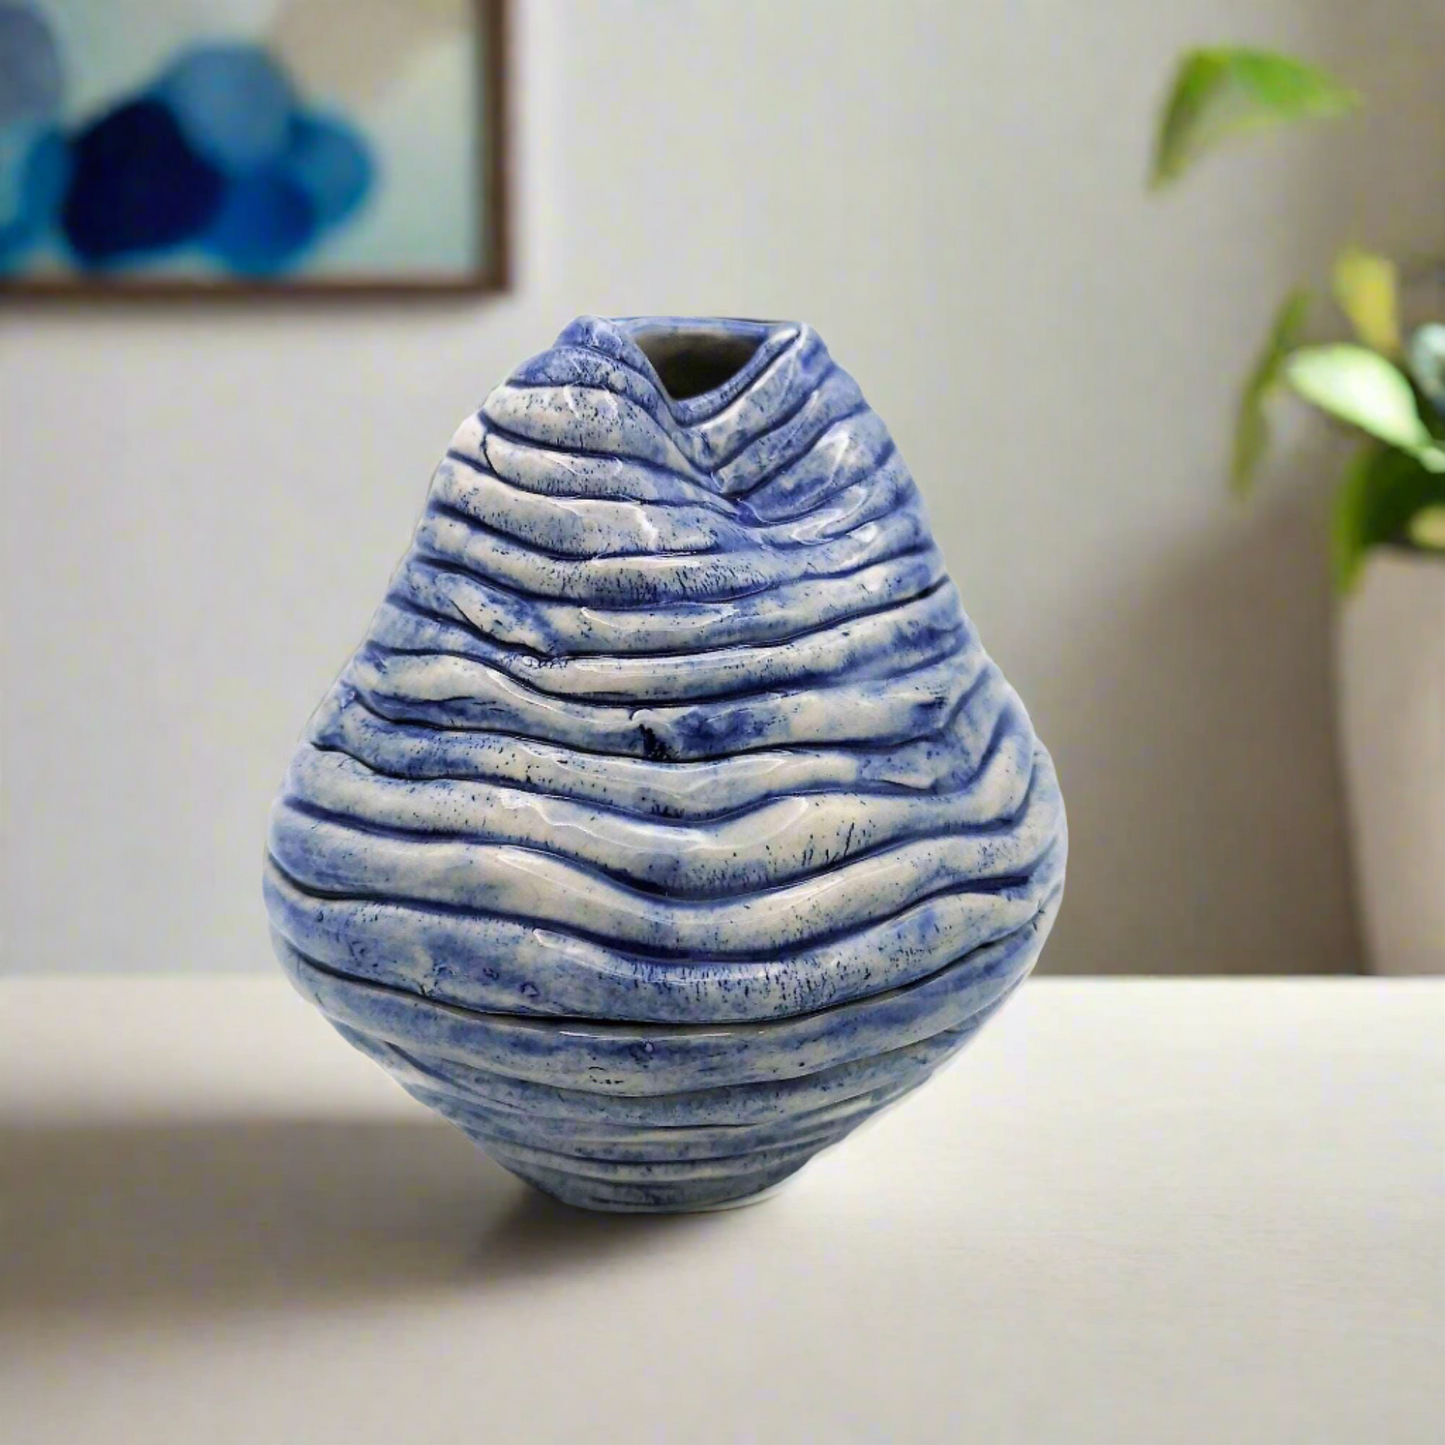 1pc Blue Handmade Ceramic Vase - Irregular Shaped Pottery, Abstract Sculpture Vessel, Best Seller, Mom Birthday Gift from Daughter